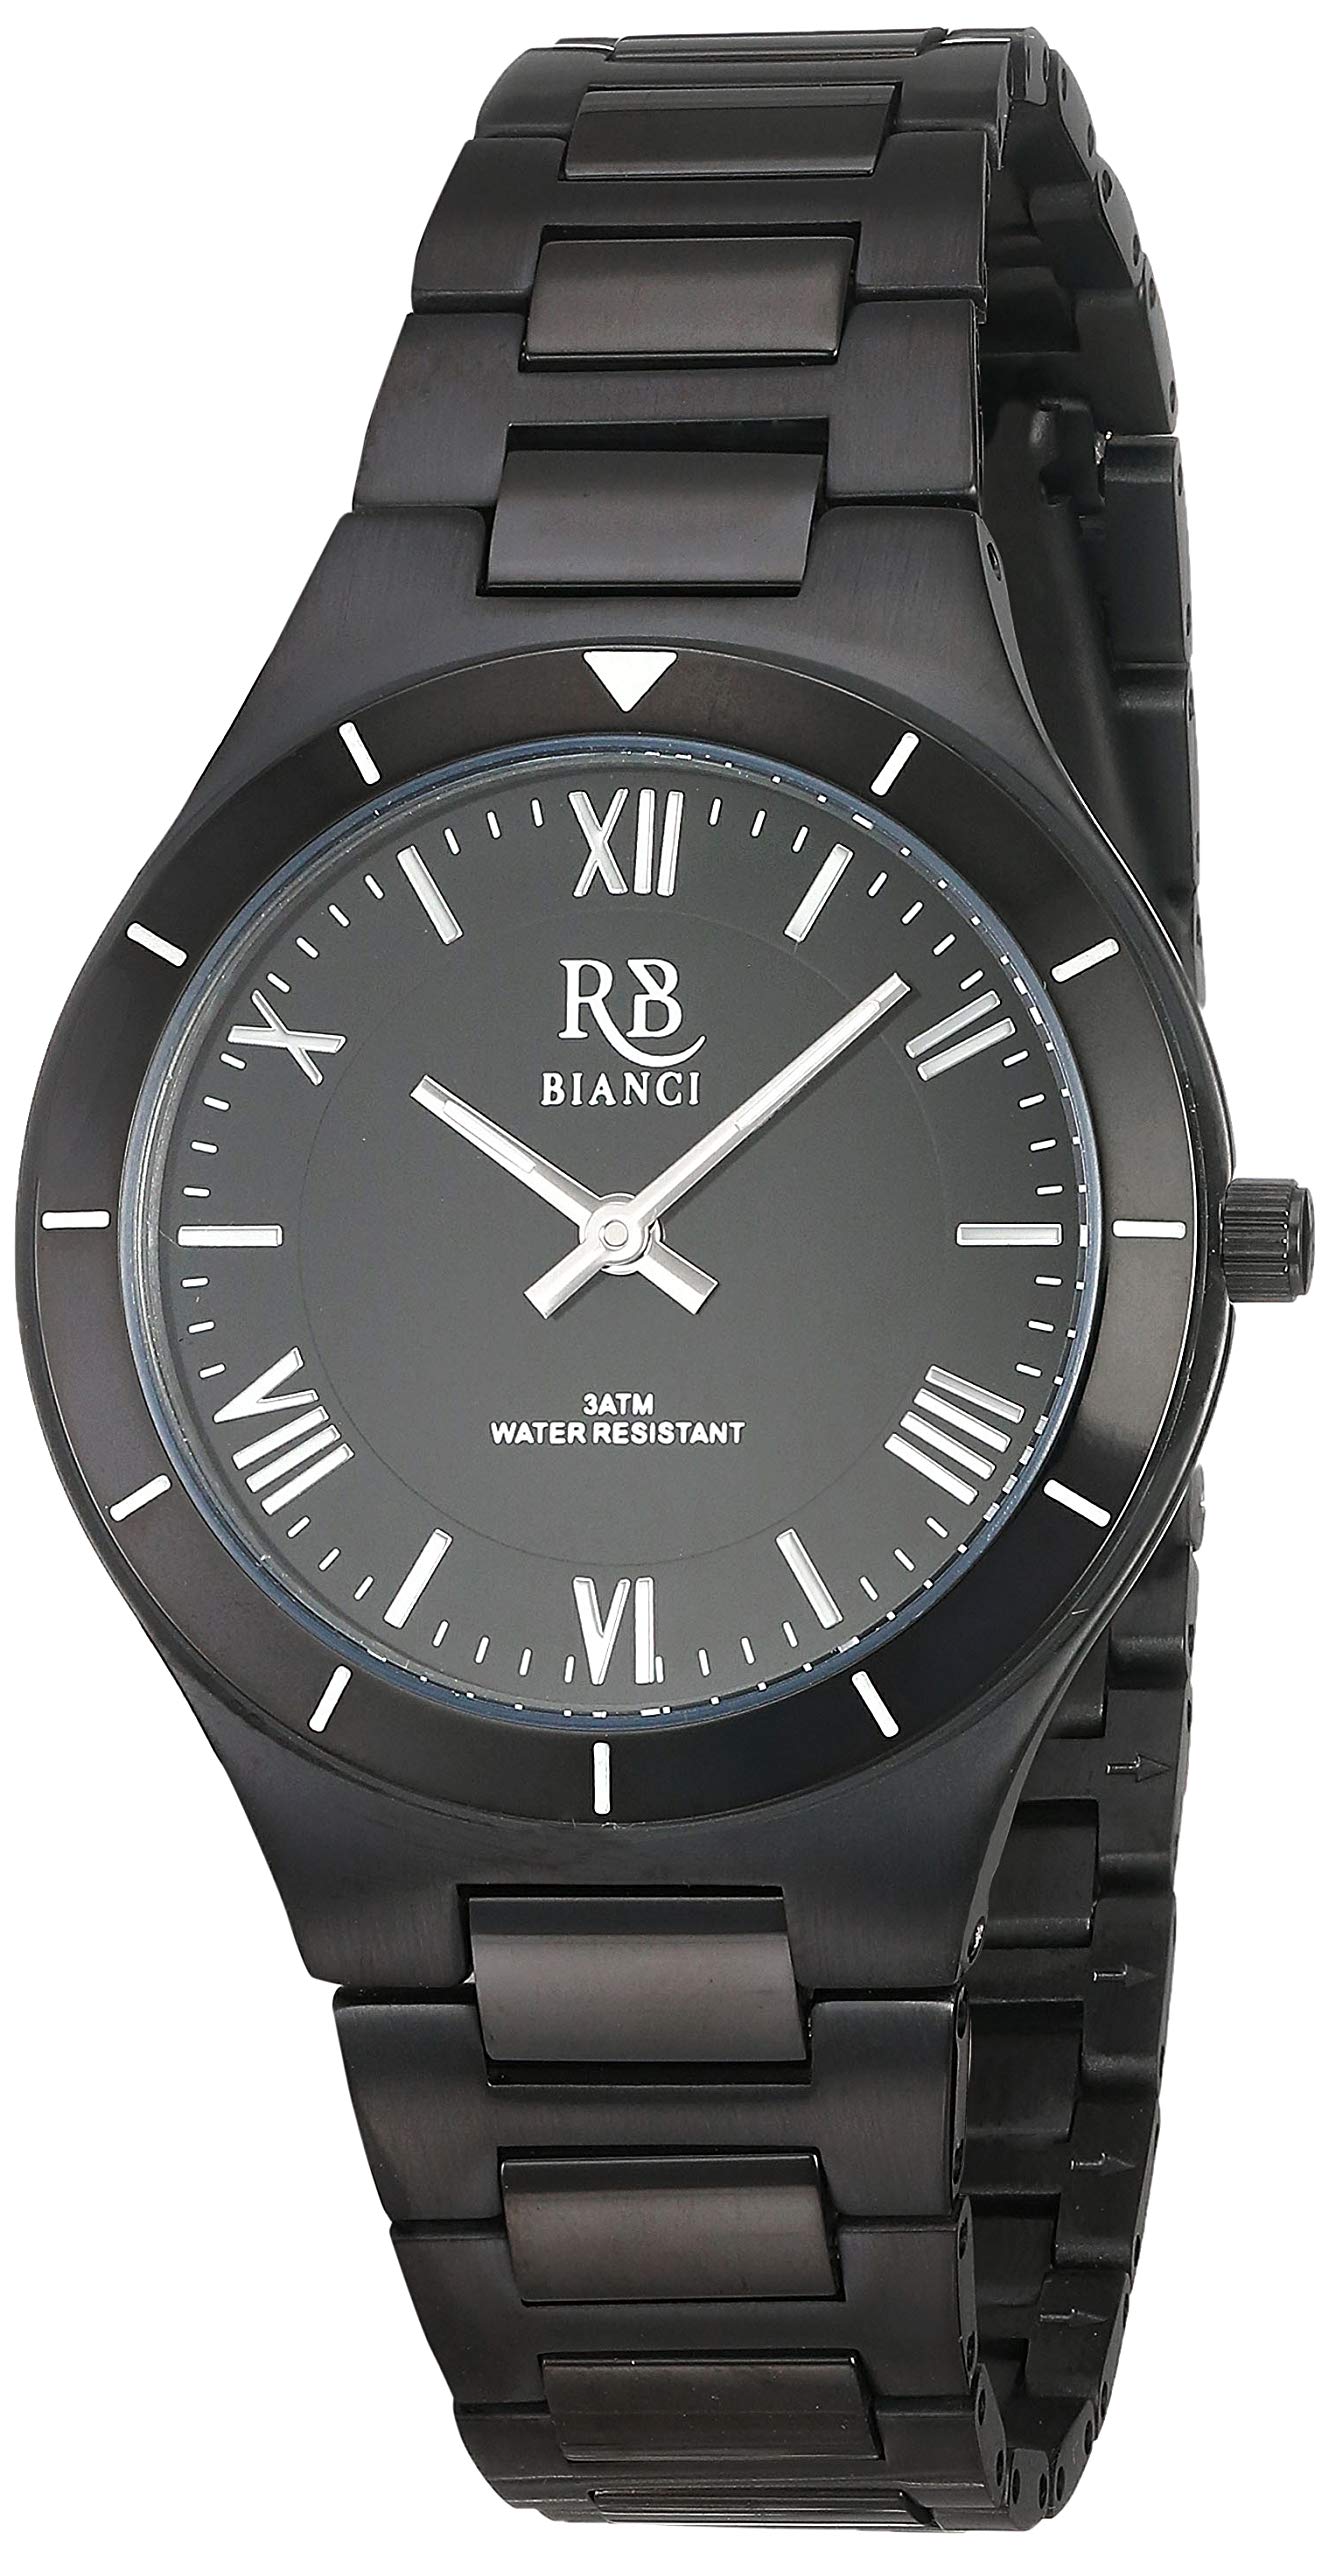 ROBERTO BIANCI WATCHES Women's RB0410 Eterno Analog Display Quartz Black Watch